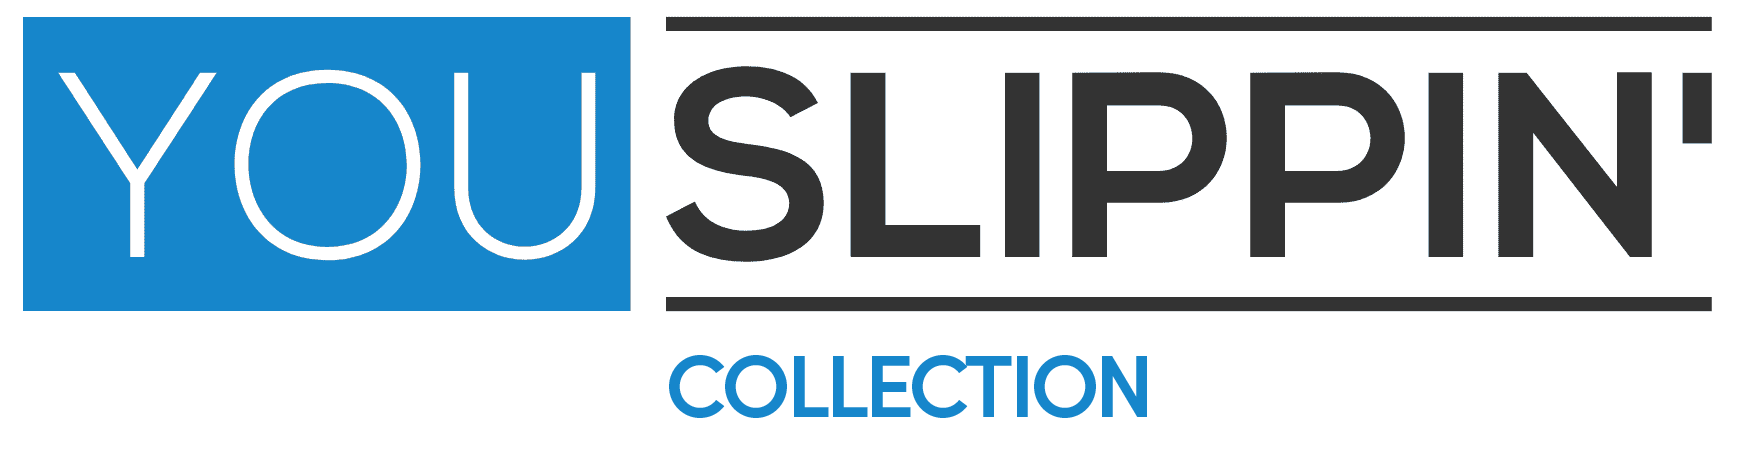 You Slippin' Collection Logo